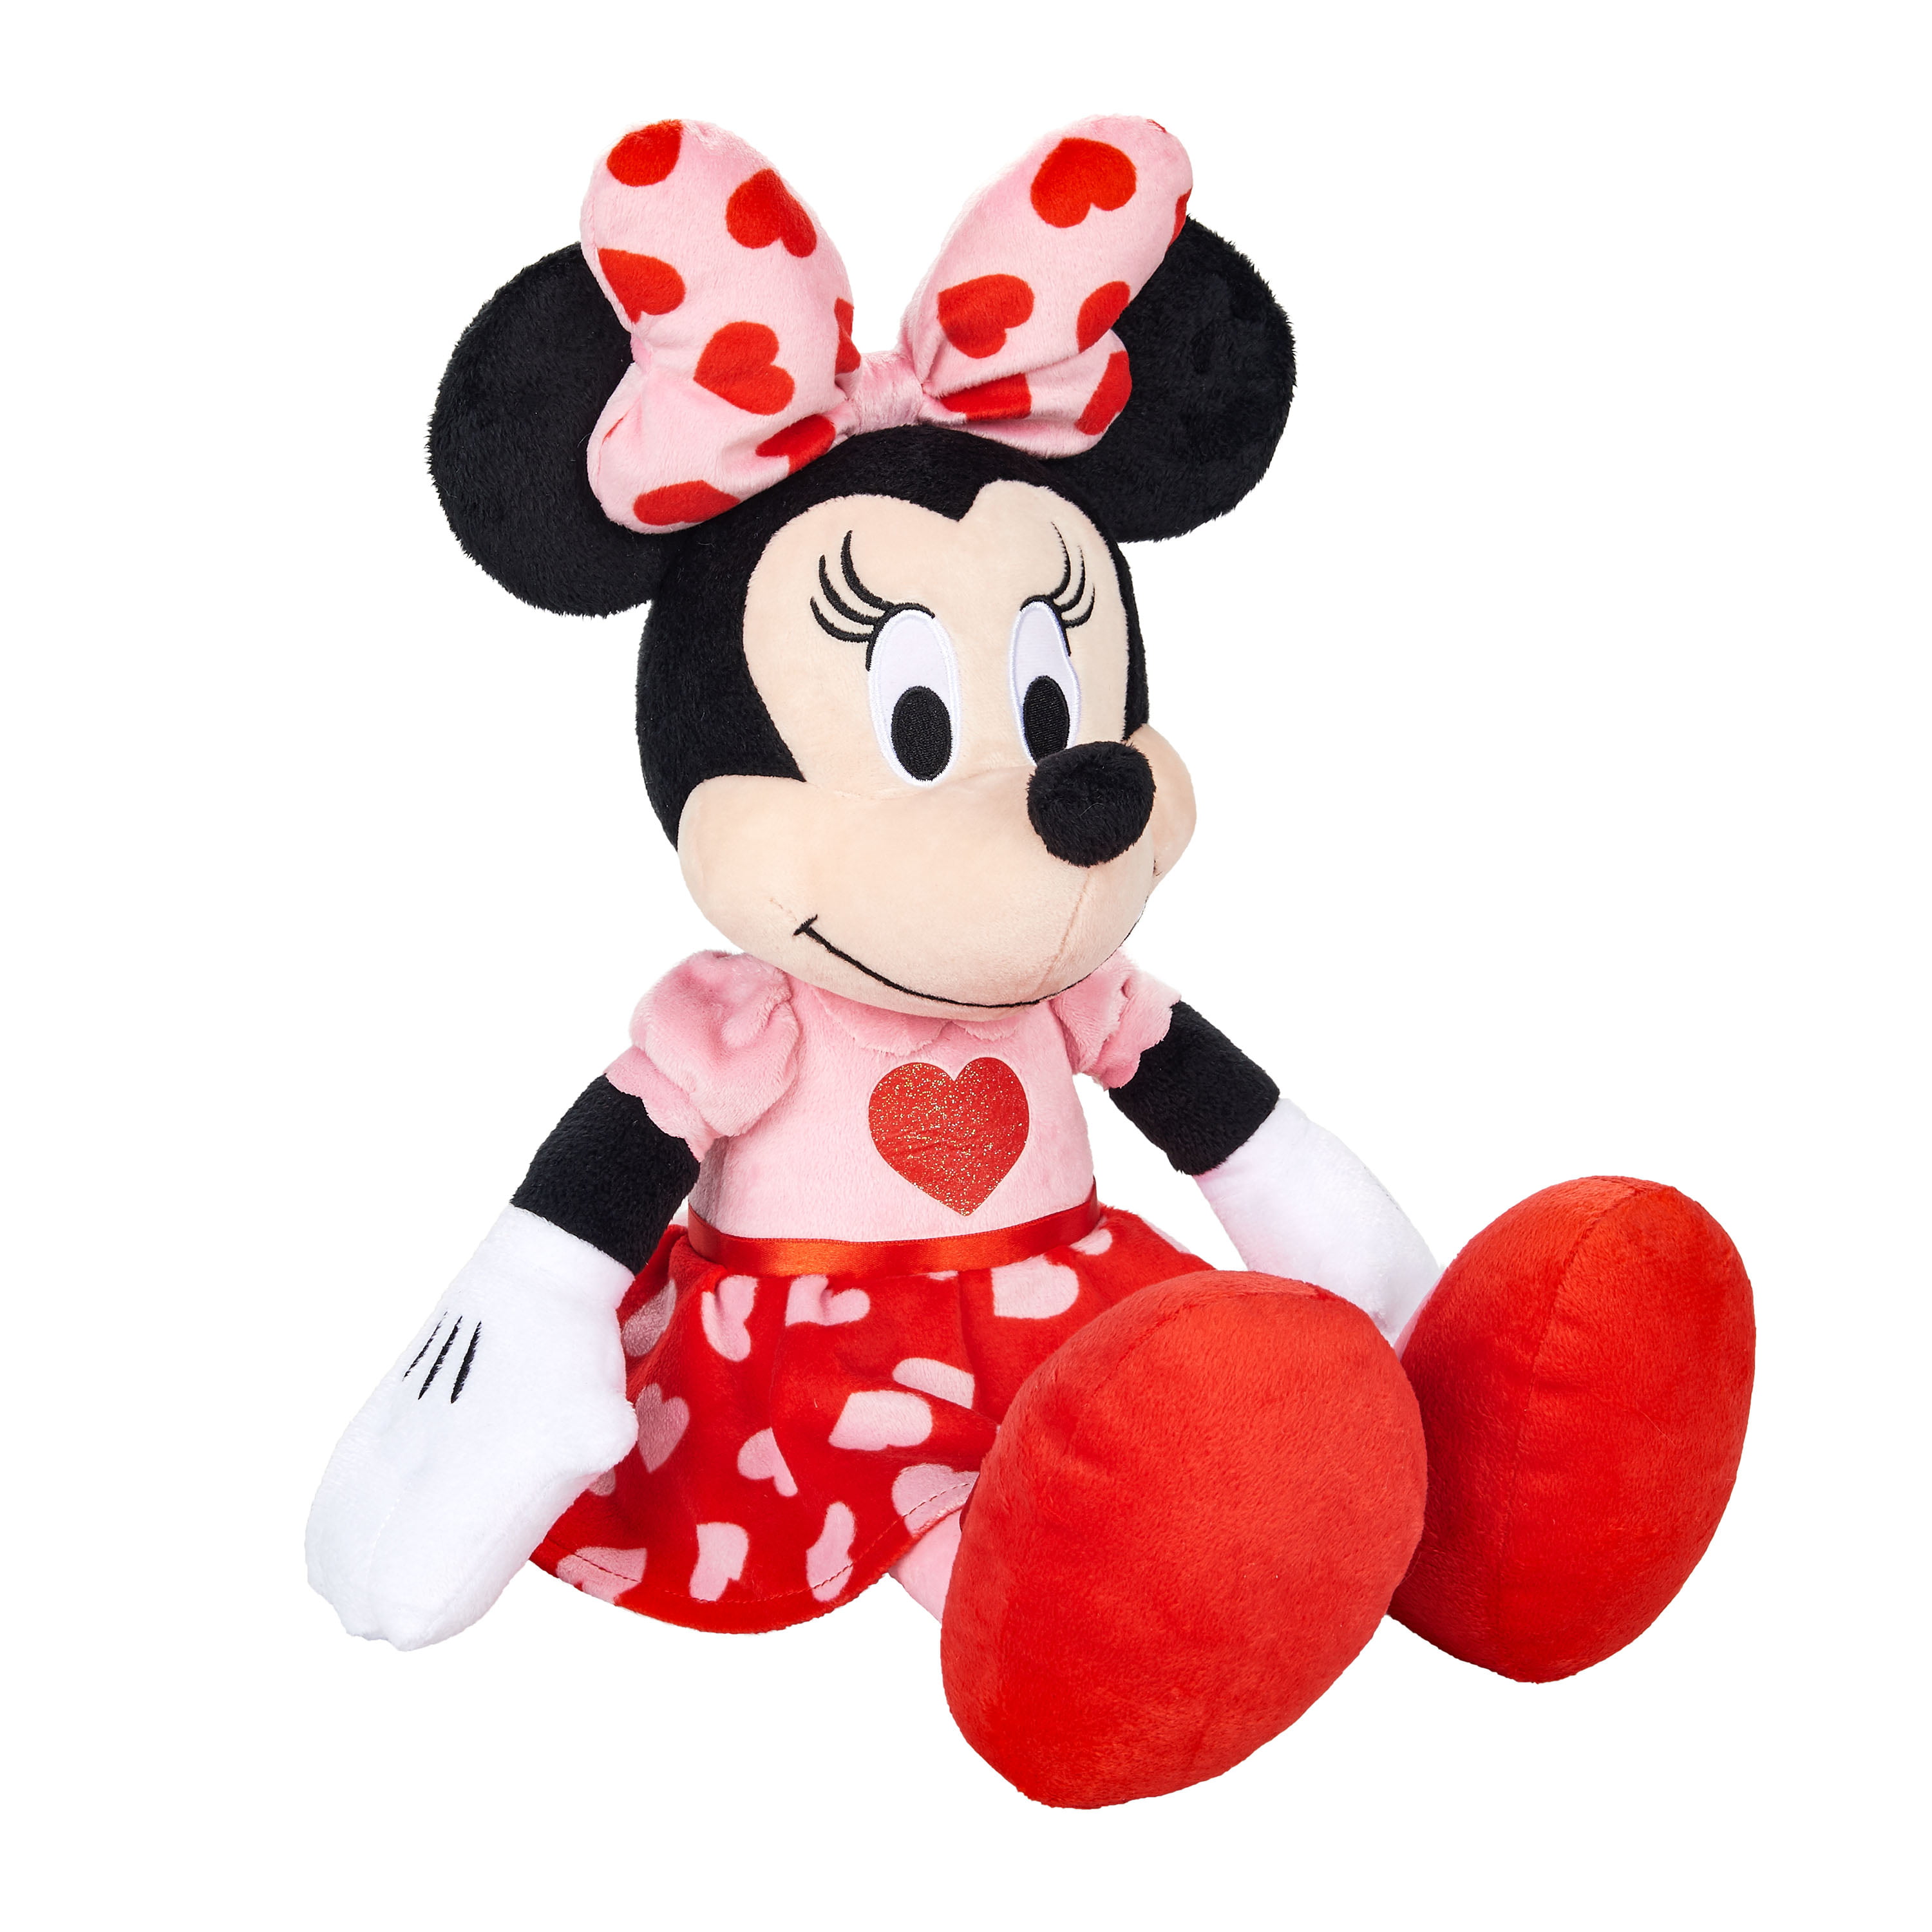 Disney Large Plush Minnie Mouse - Walmart.com - Walmart.com